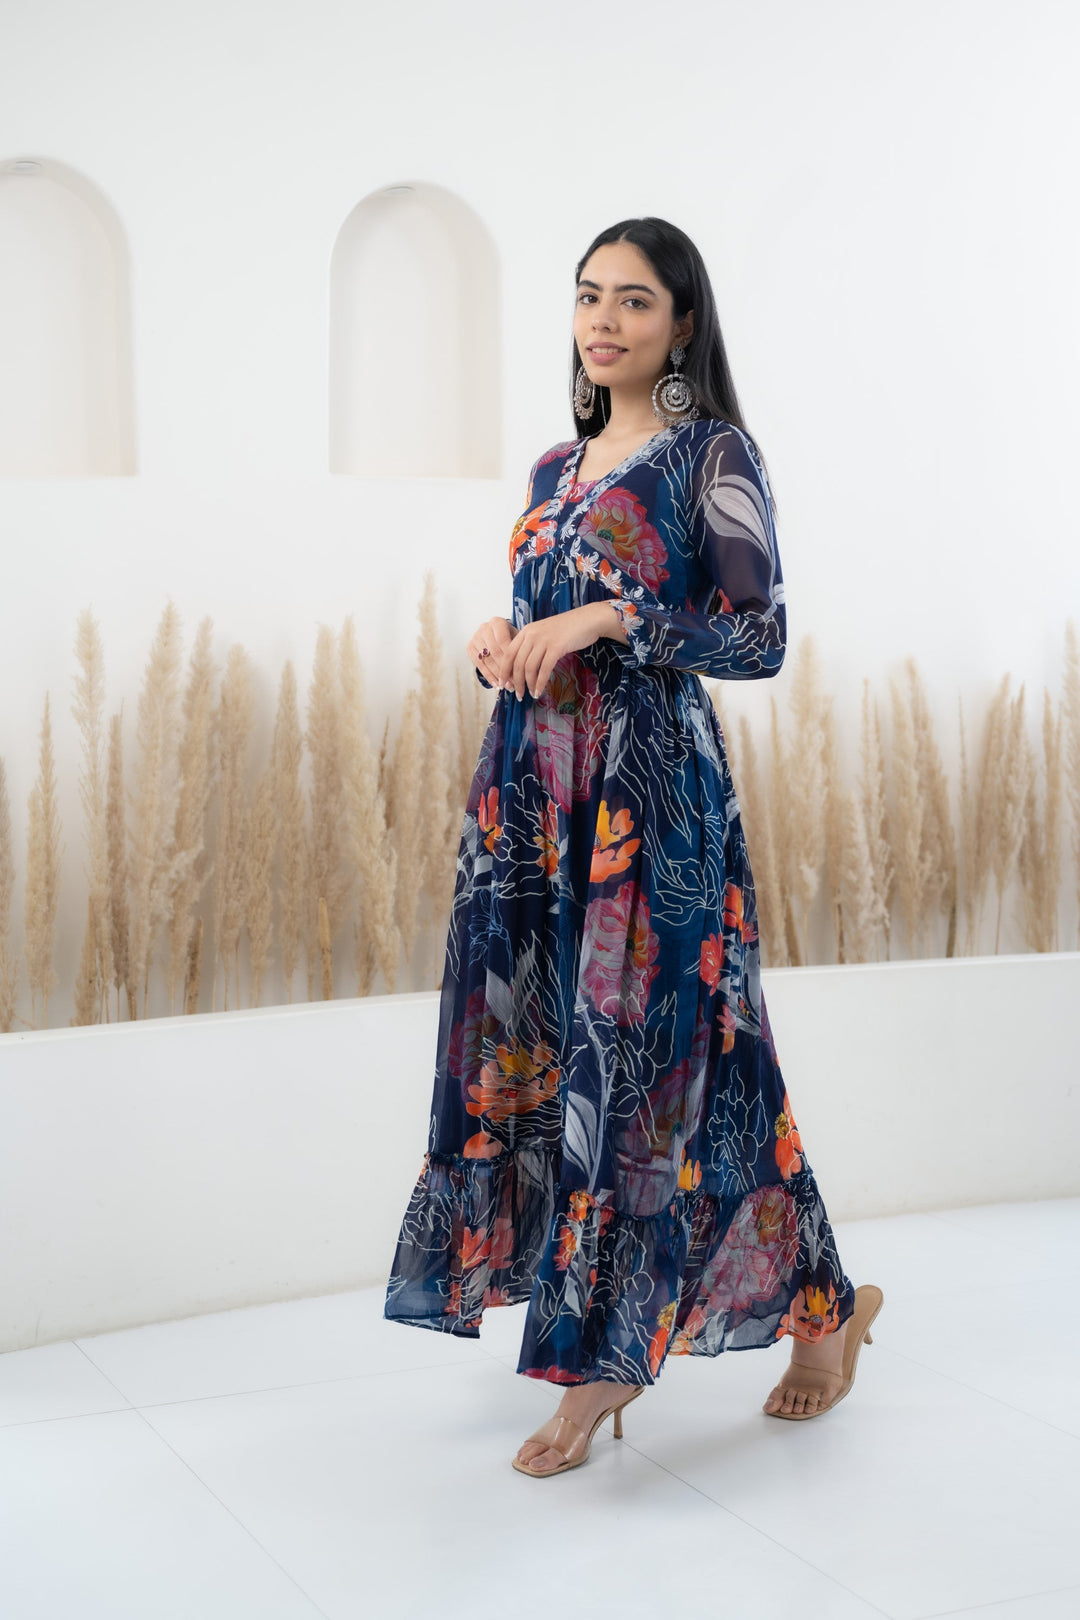 Women's Blue Floral Printed Long Dress by Myshka- 1 pc set